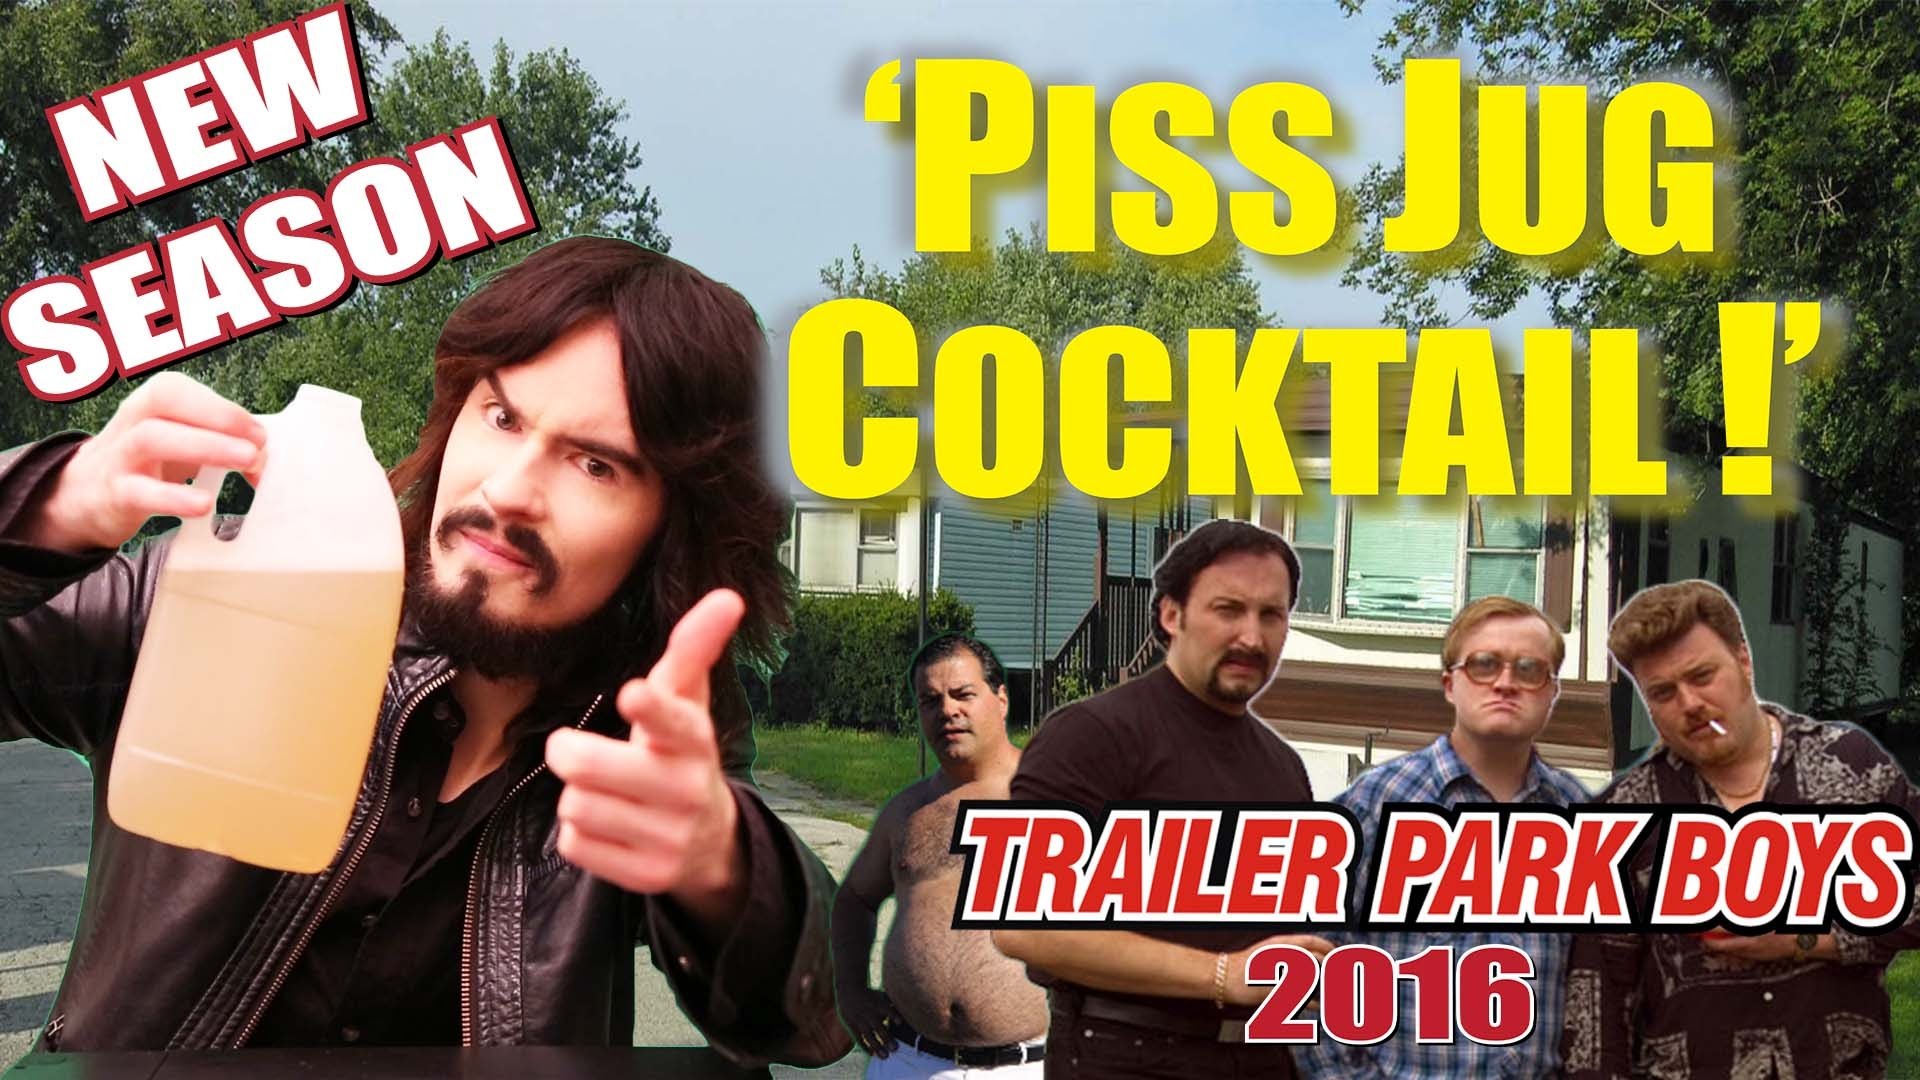 1920x1080 'Trailer Park Boys' - Piss Jug Cocktail - New Season 10 - (2016) - YouTube